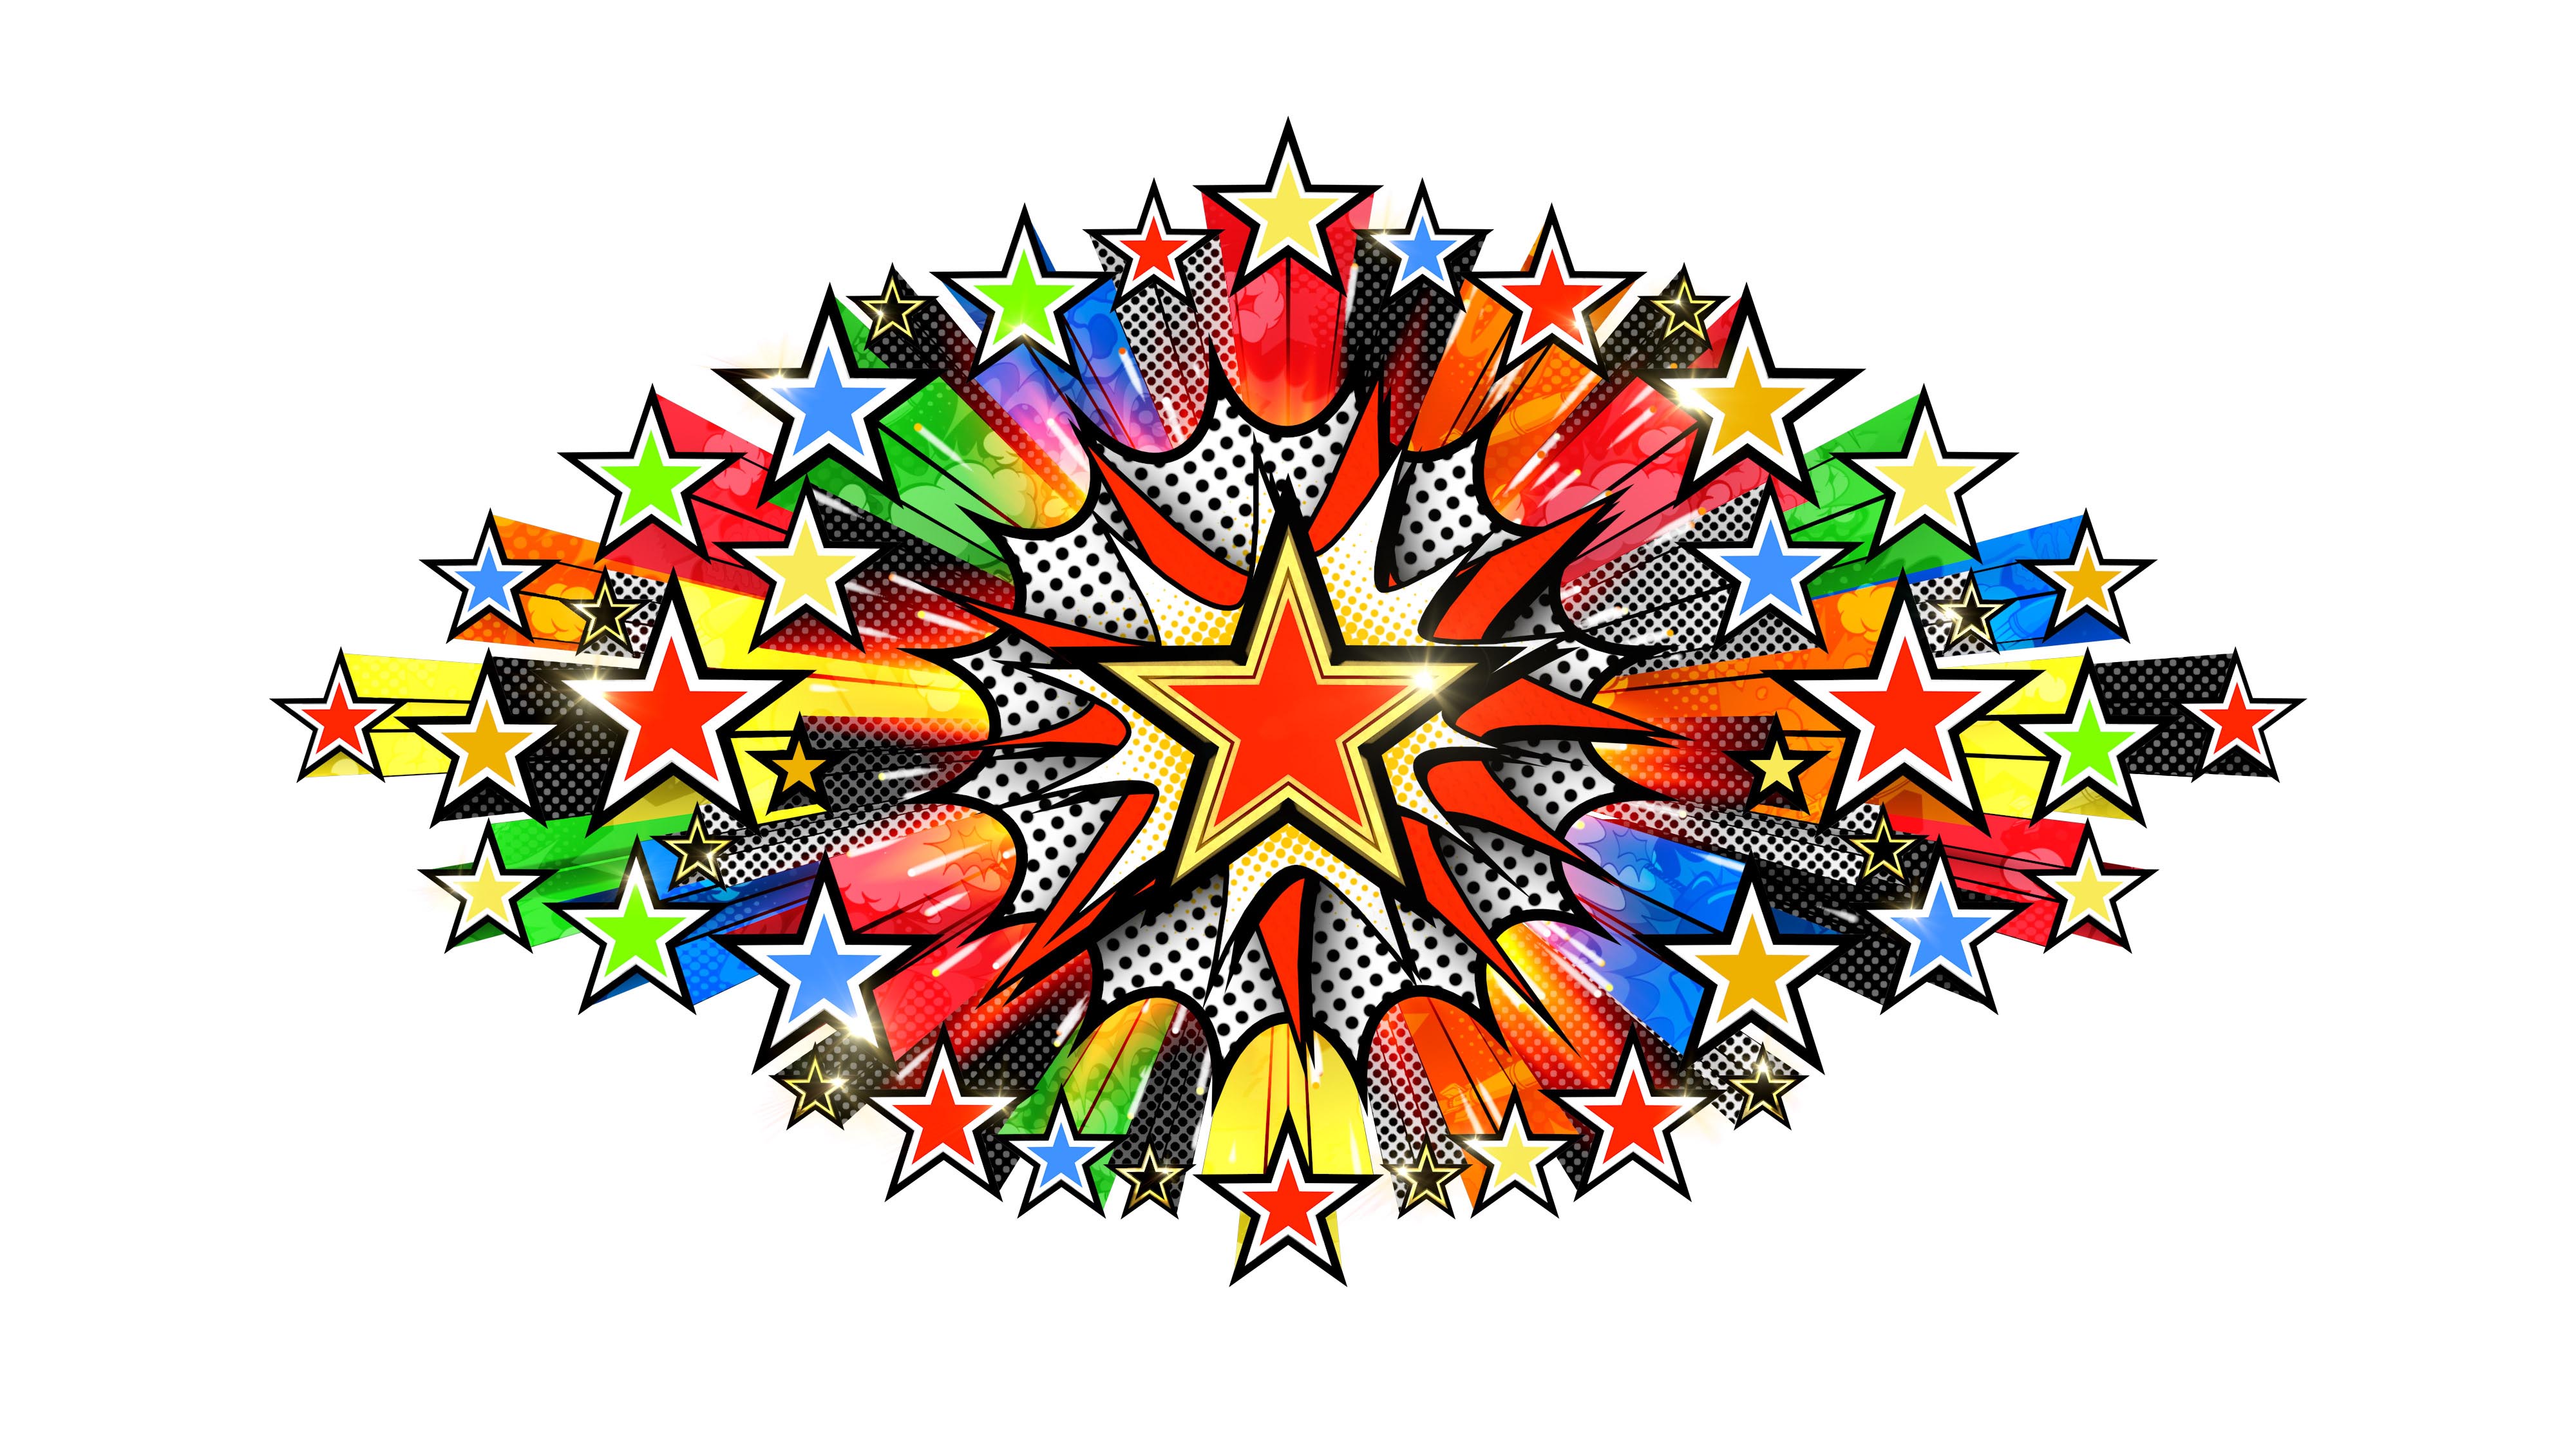 Pre-CBB: Channel 5 unveil pop art themed eye logo for CBB: All Star/New Star